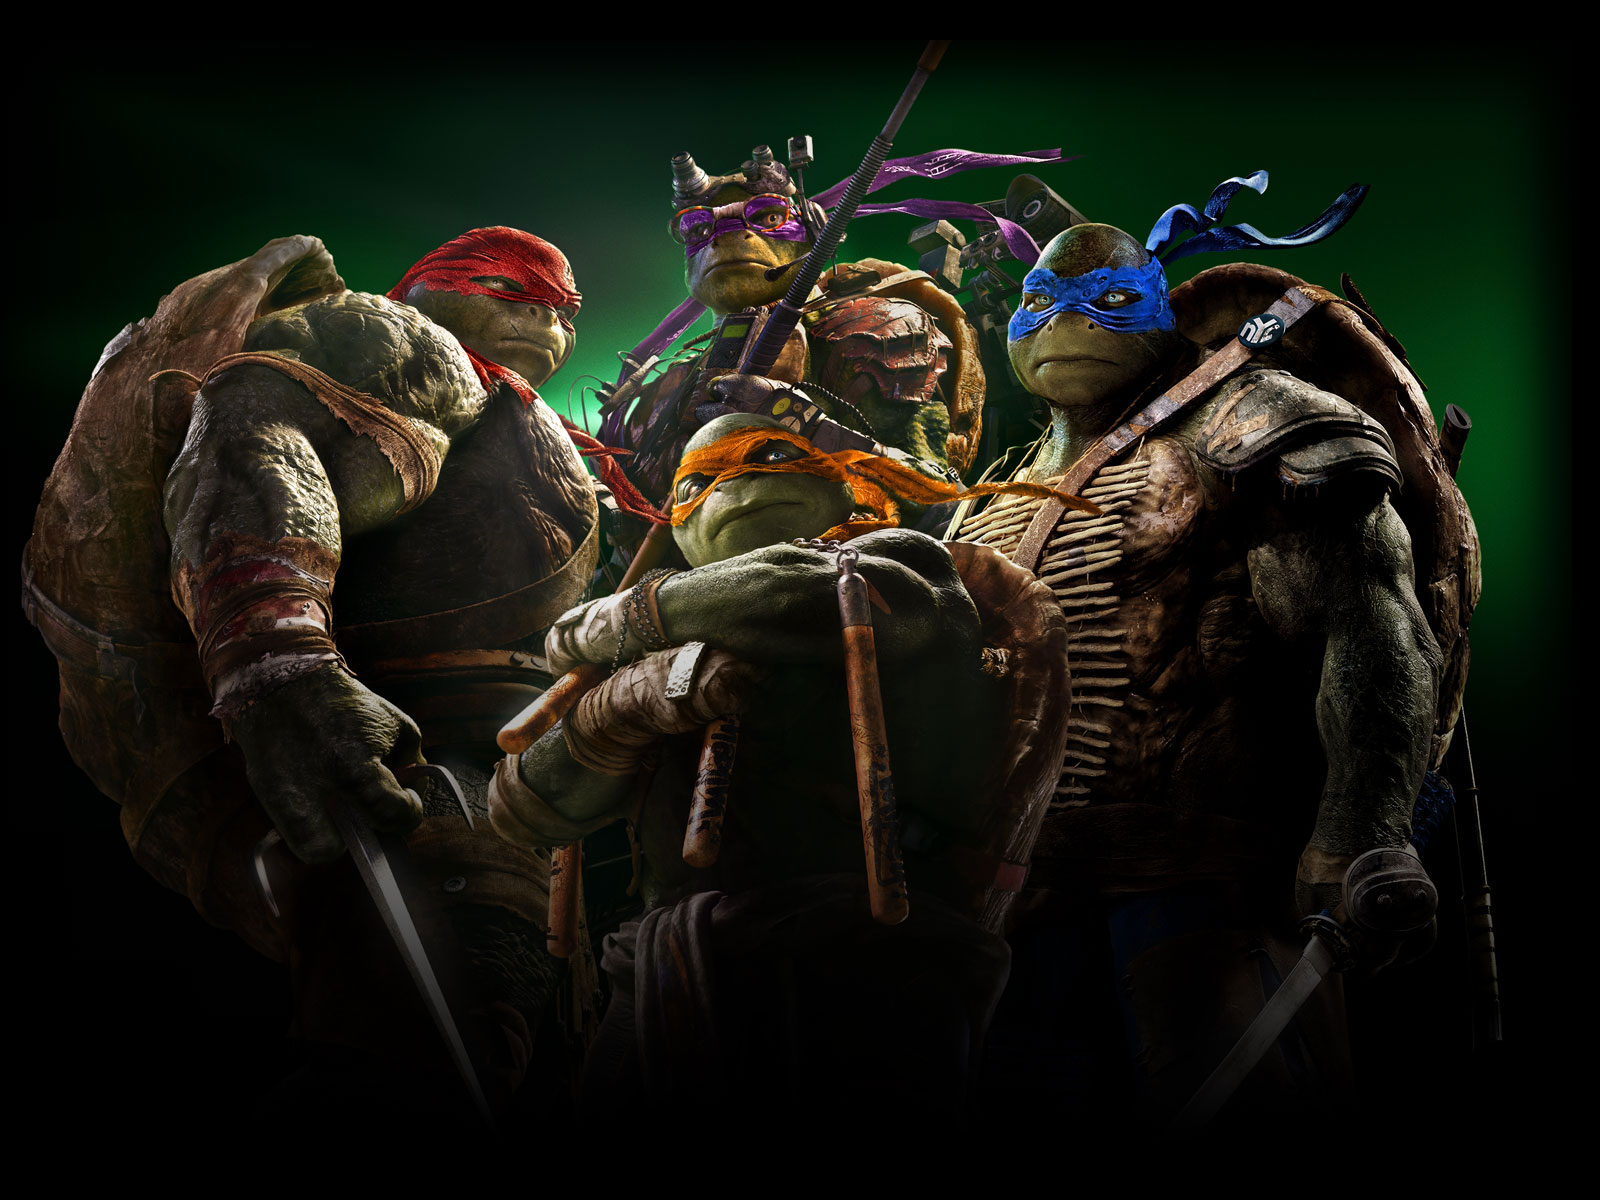 Mutant Ninja Turtles Tmnt HD Desktop iPhone iPad Wallpaper